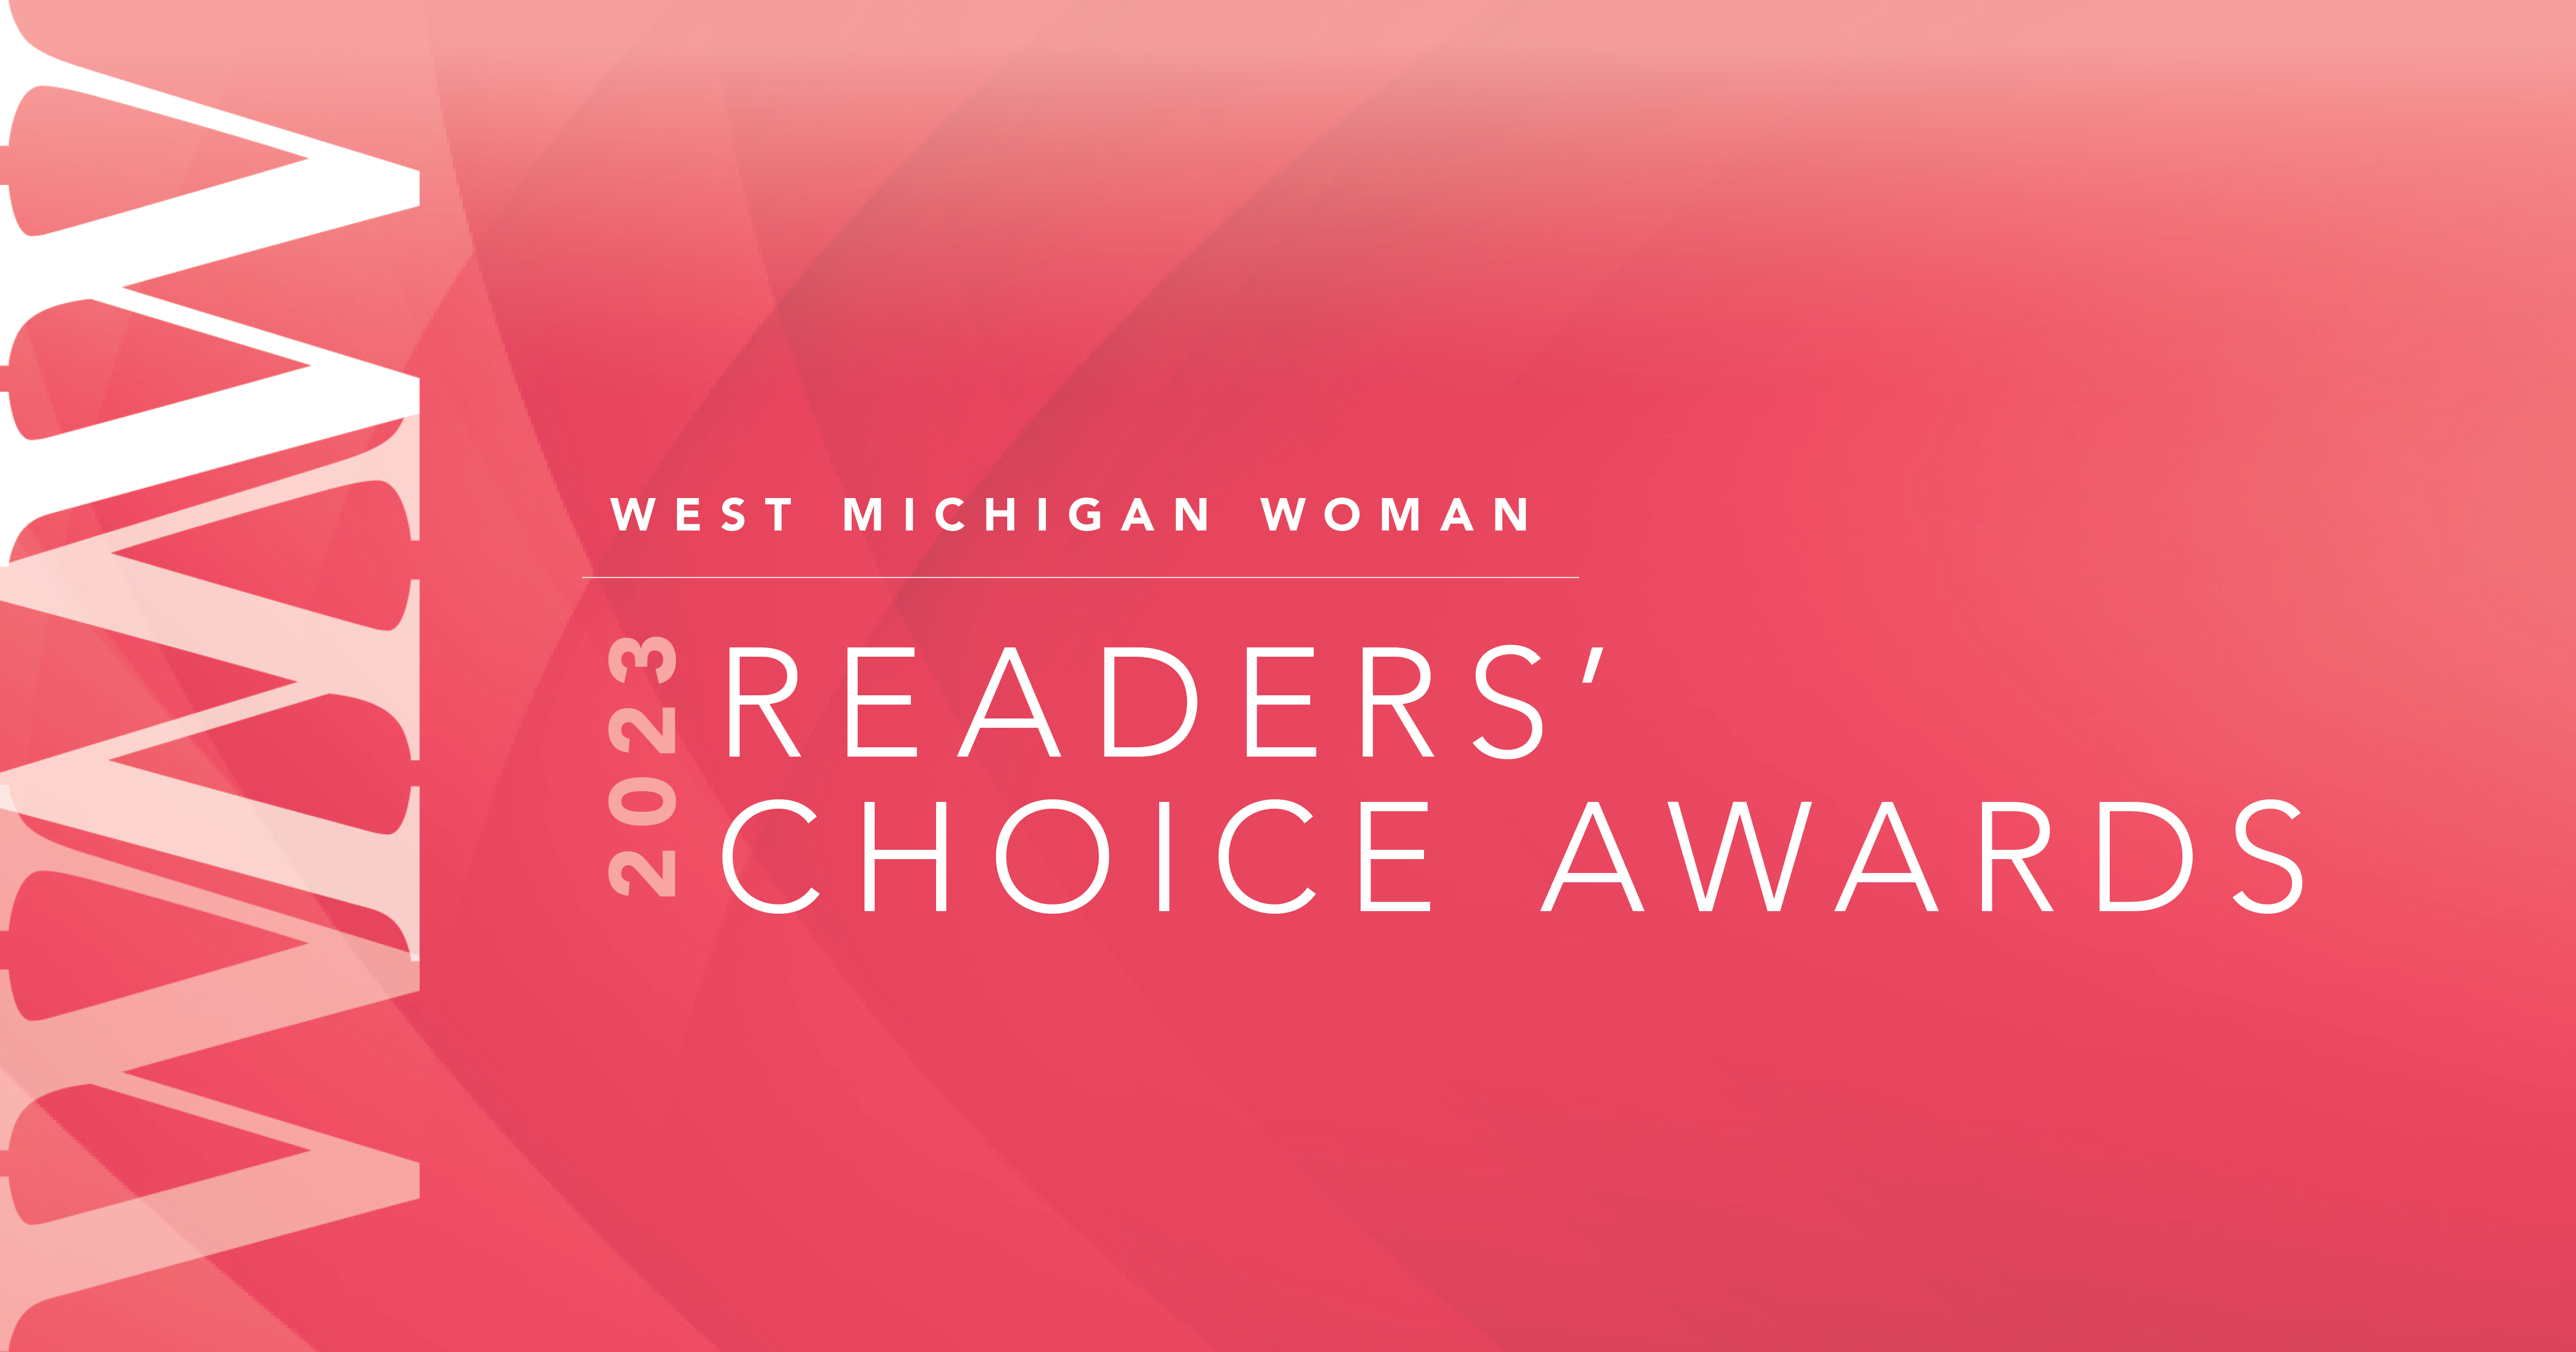 2023 Readers’ Choice Awards